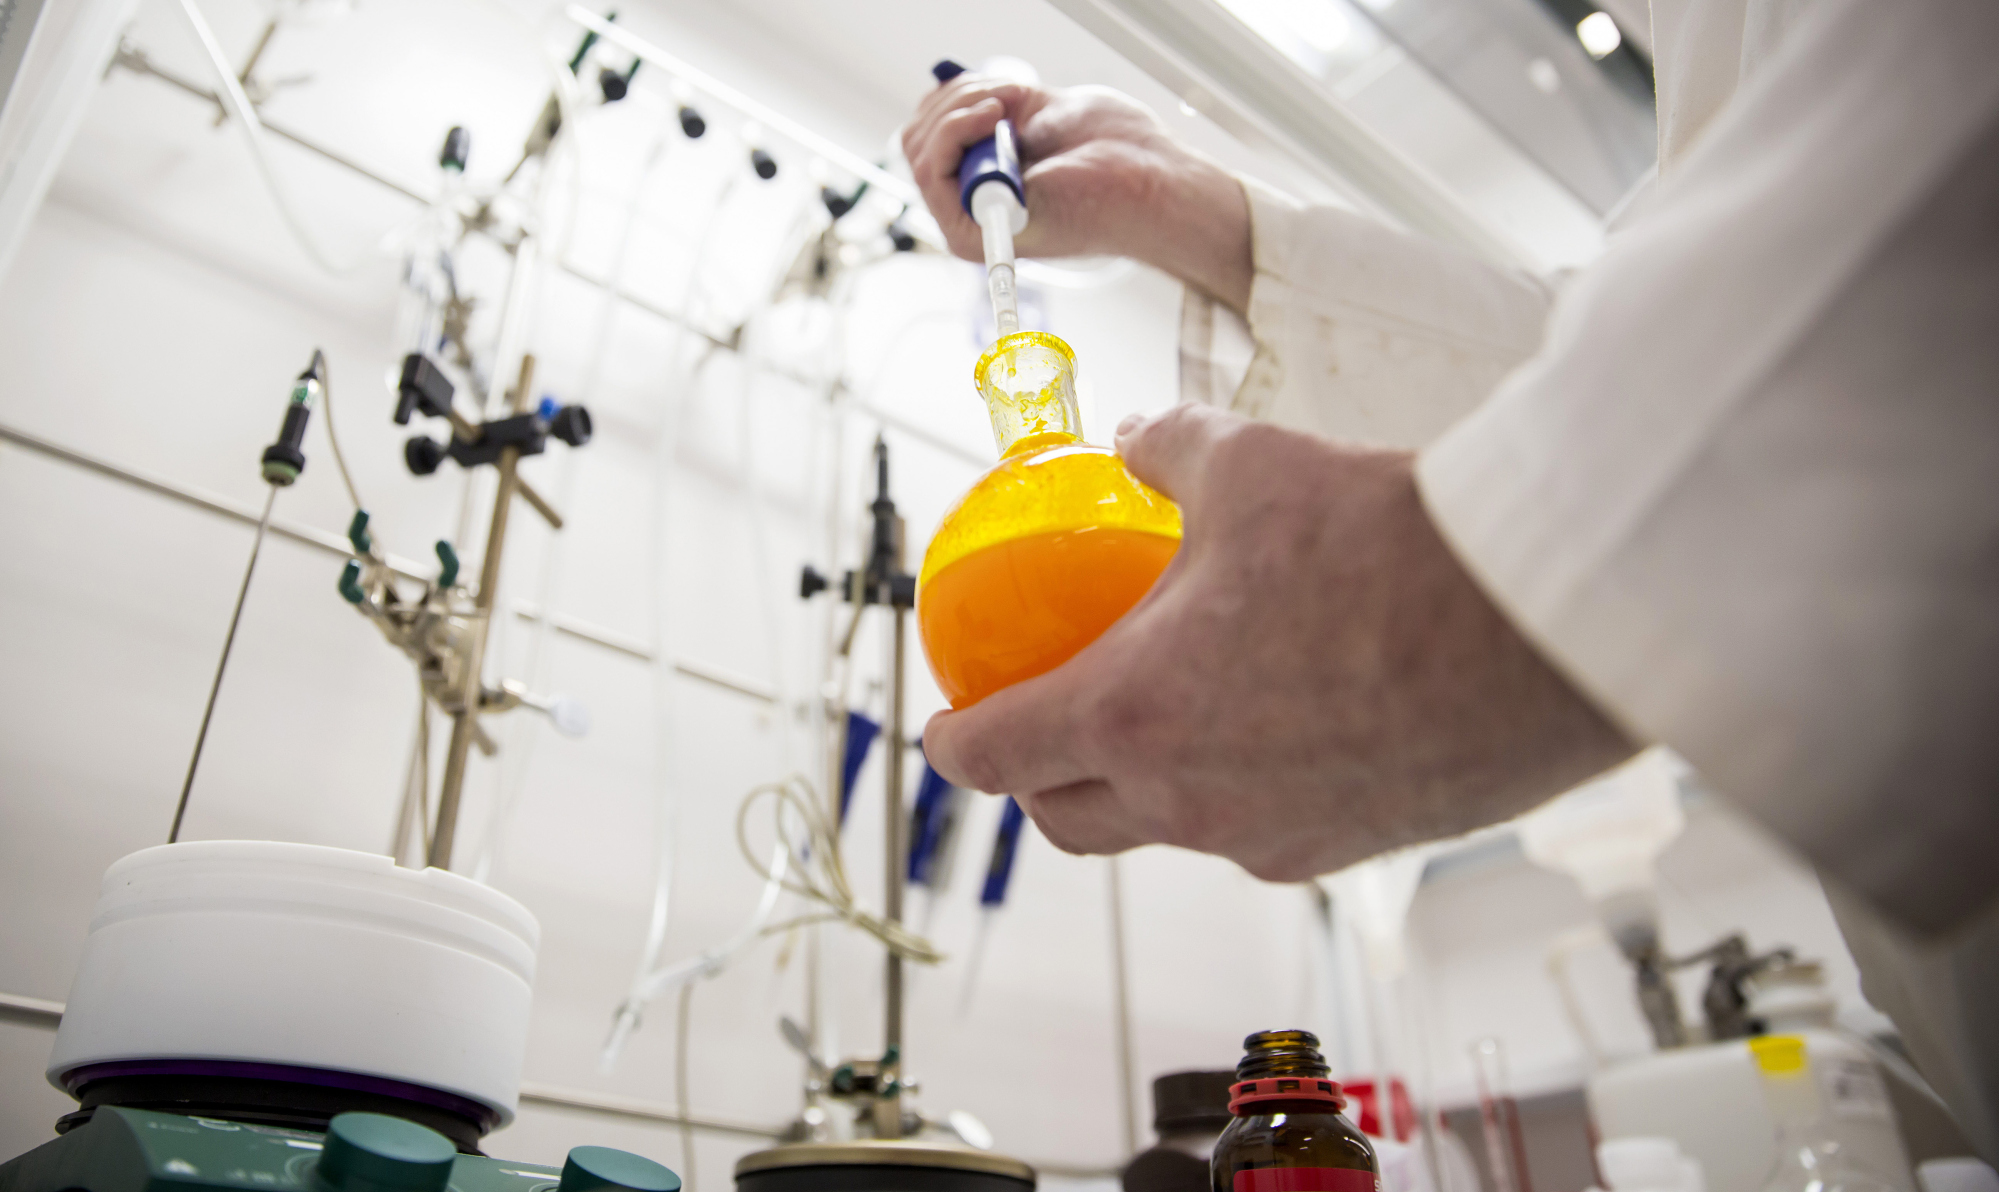 A scientist mixes chemicals inside a&nbsp;GlaxoSmithKline lab.